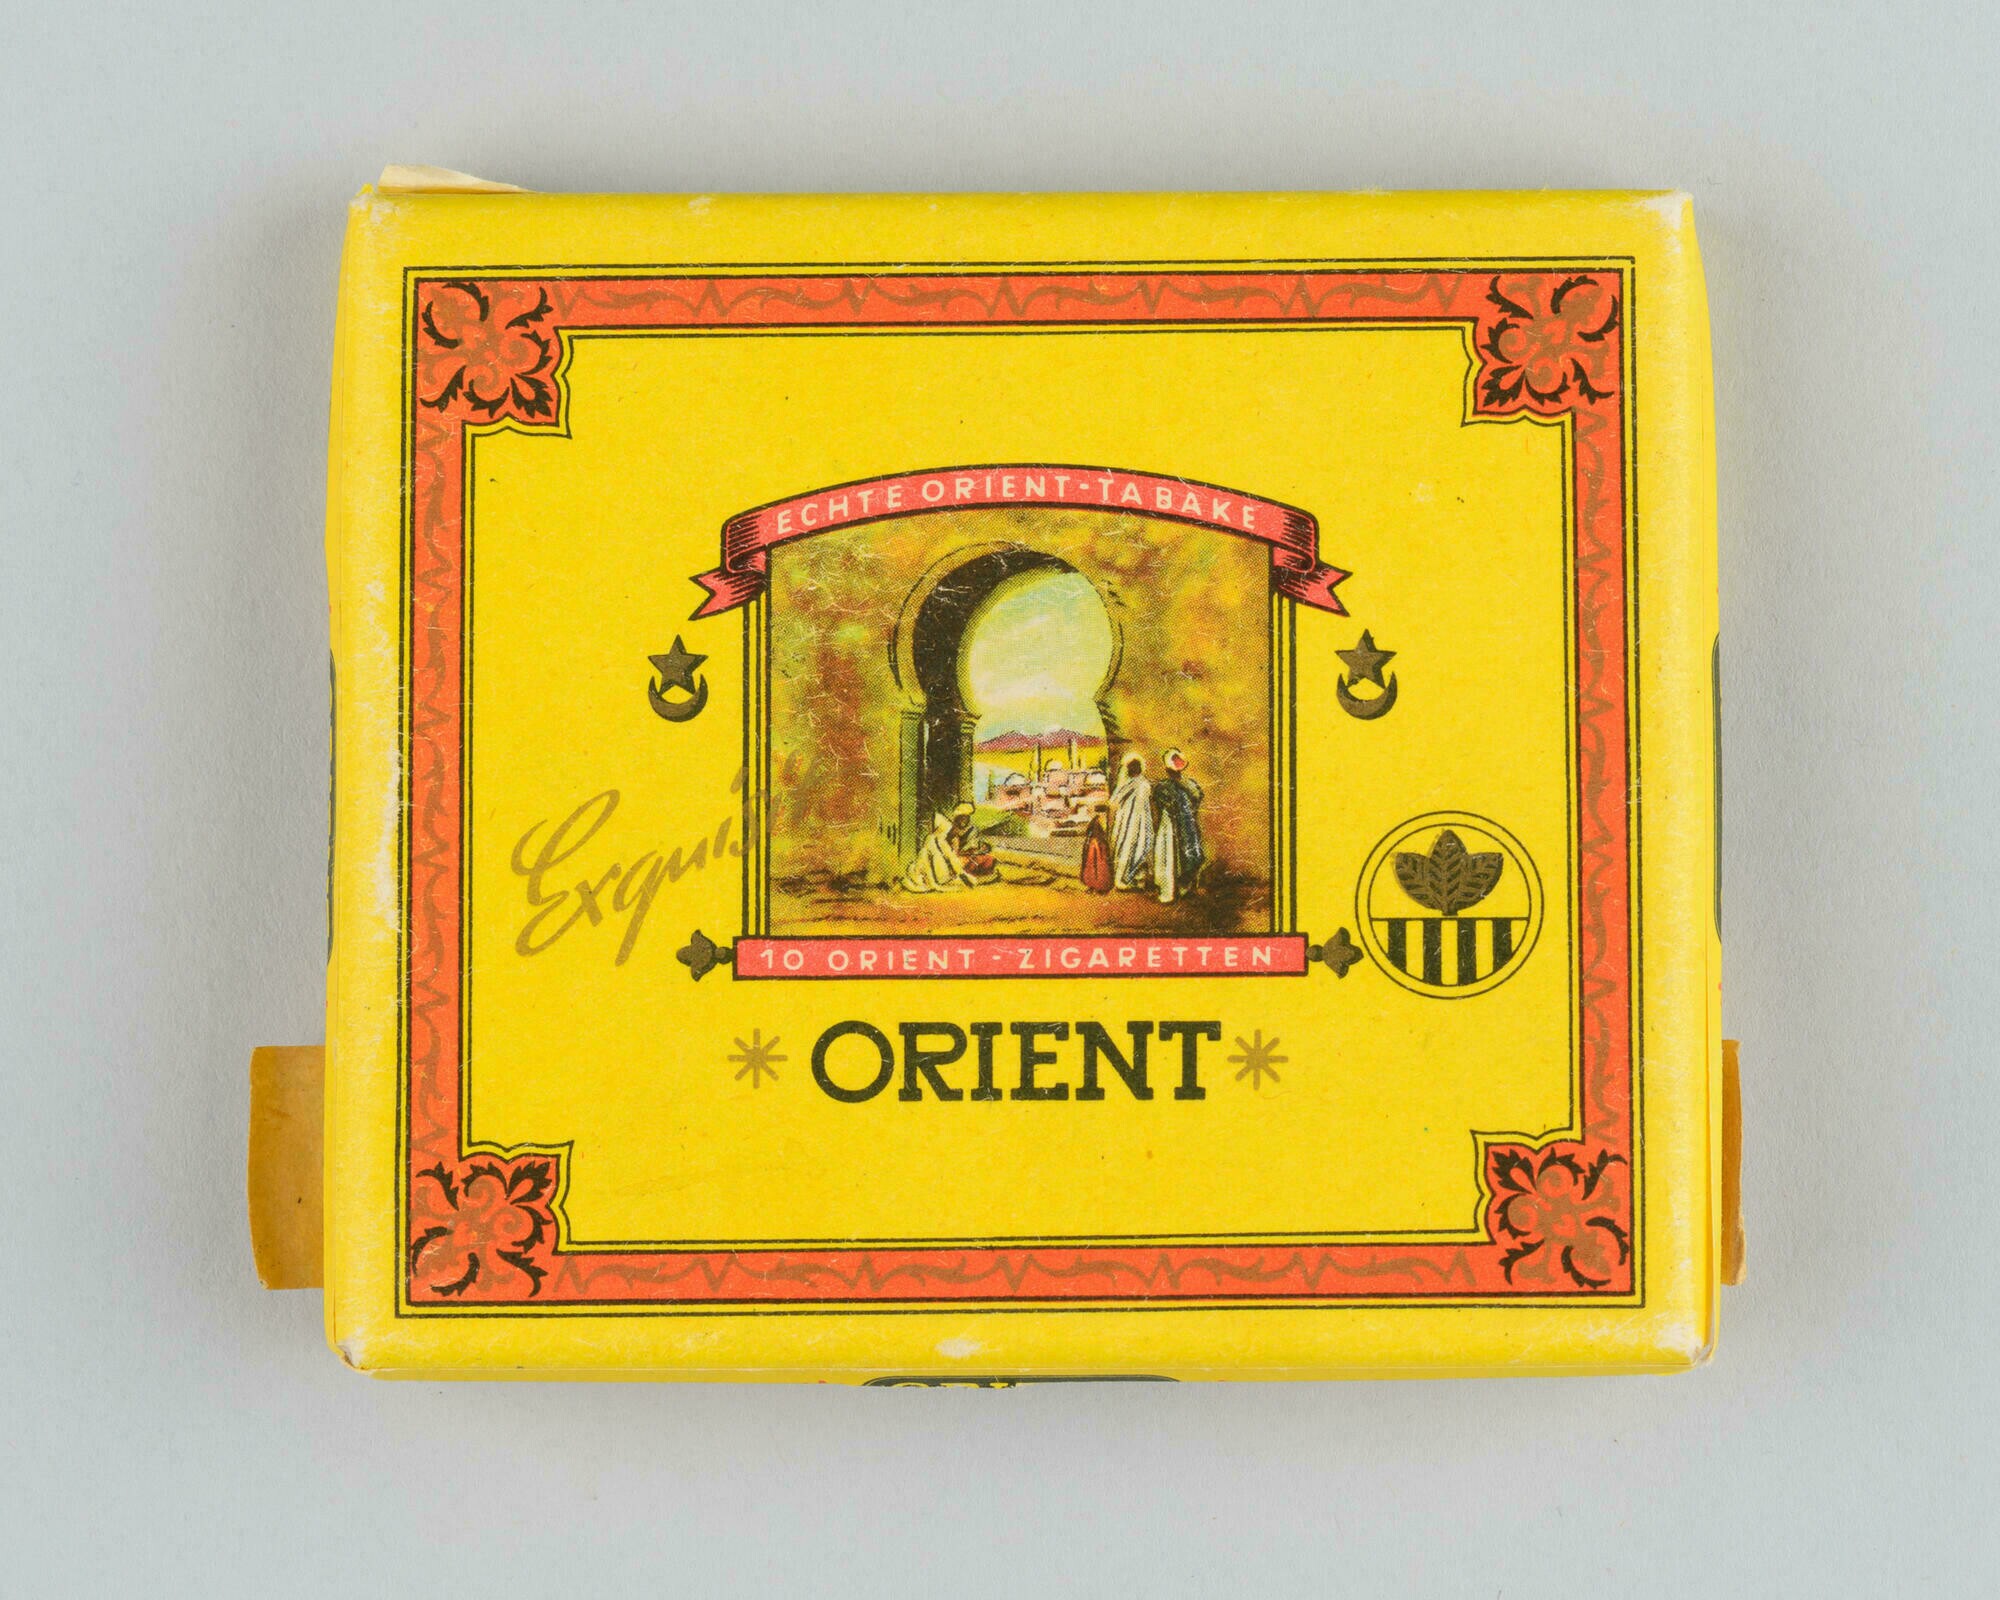 Zigarettenschachtel der Marke "Orient" (ohne Mundstück) (Stadtmuseum Dresden CC BY-NC-ND)